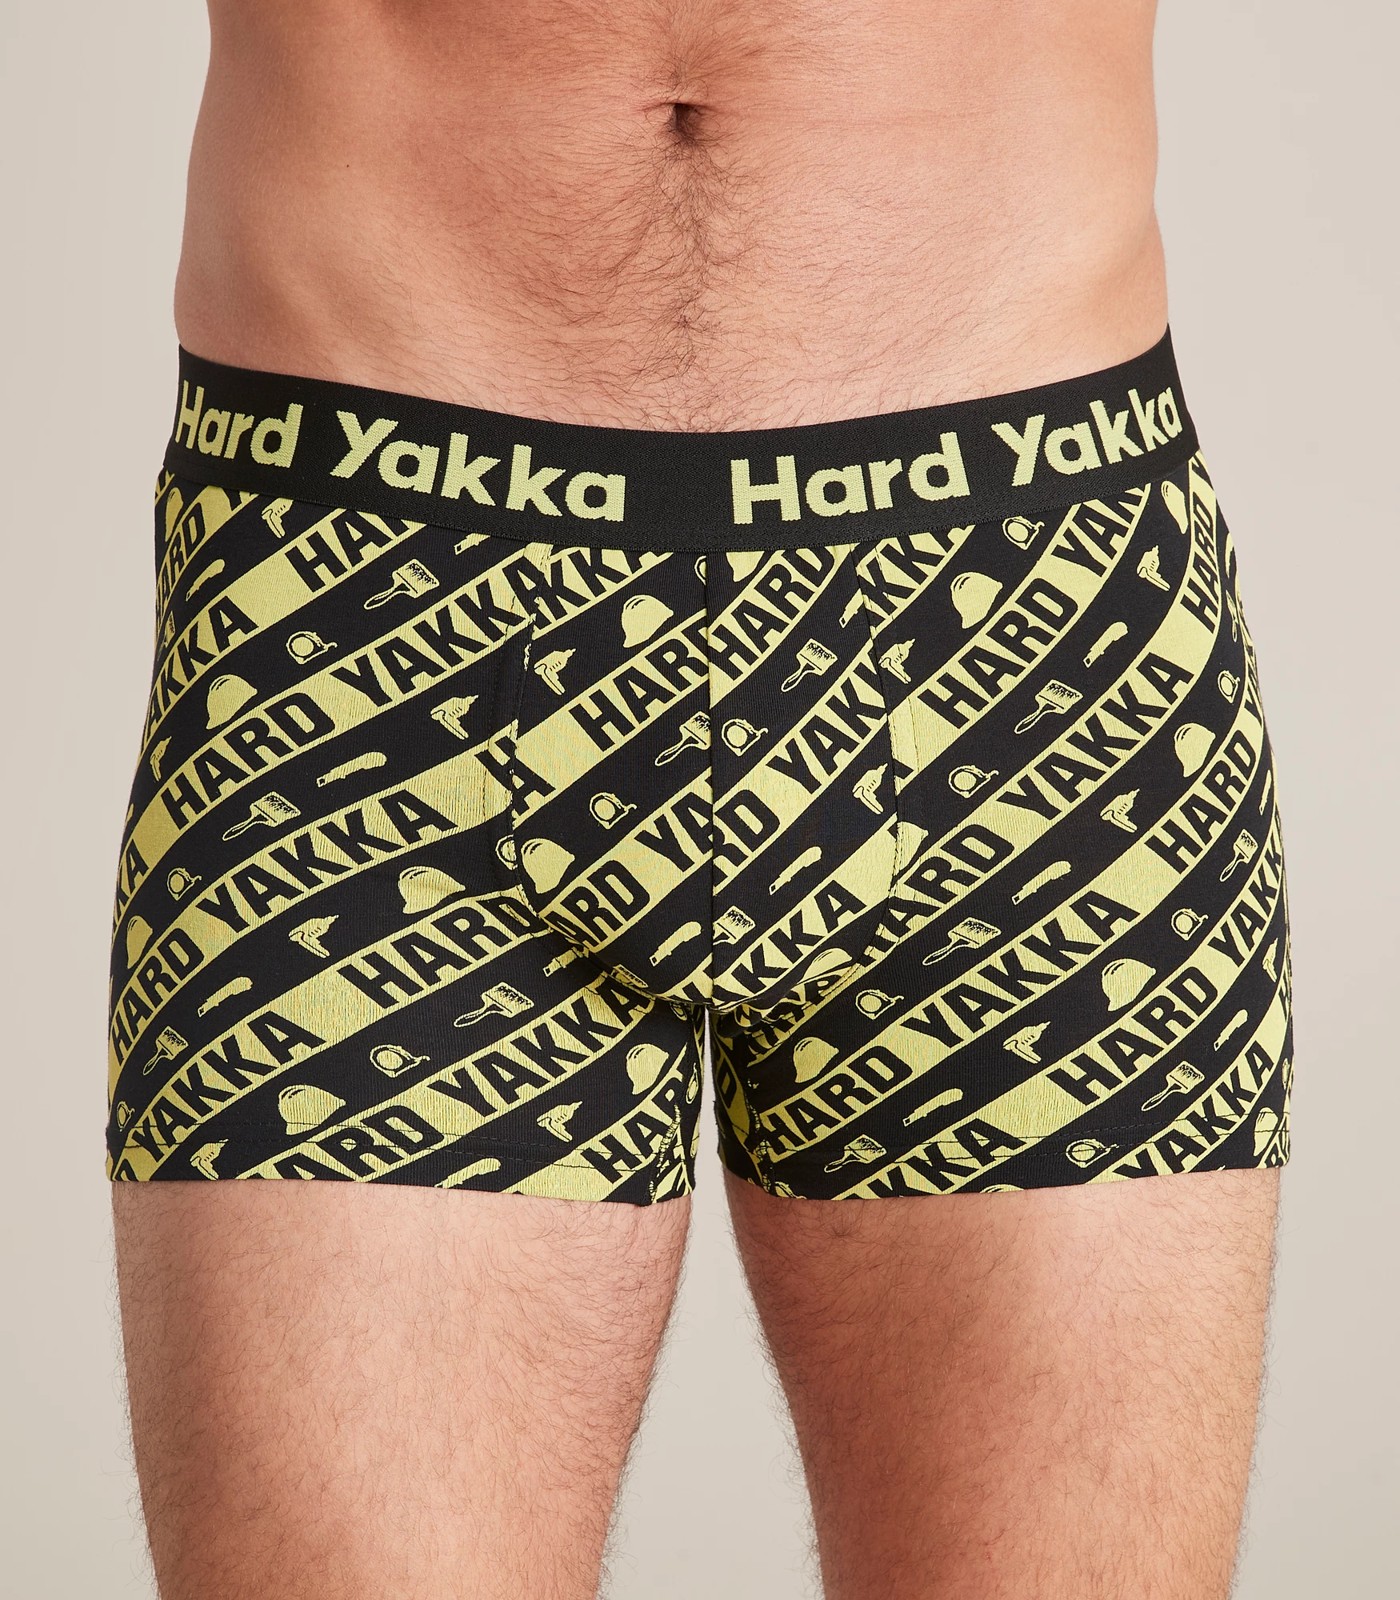 Hard Yakka 3 Pack Trunks